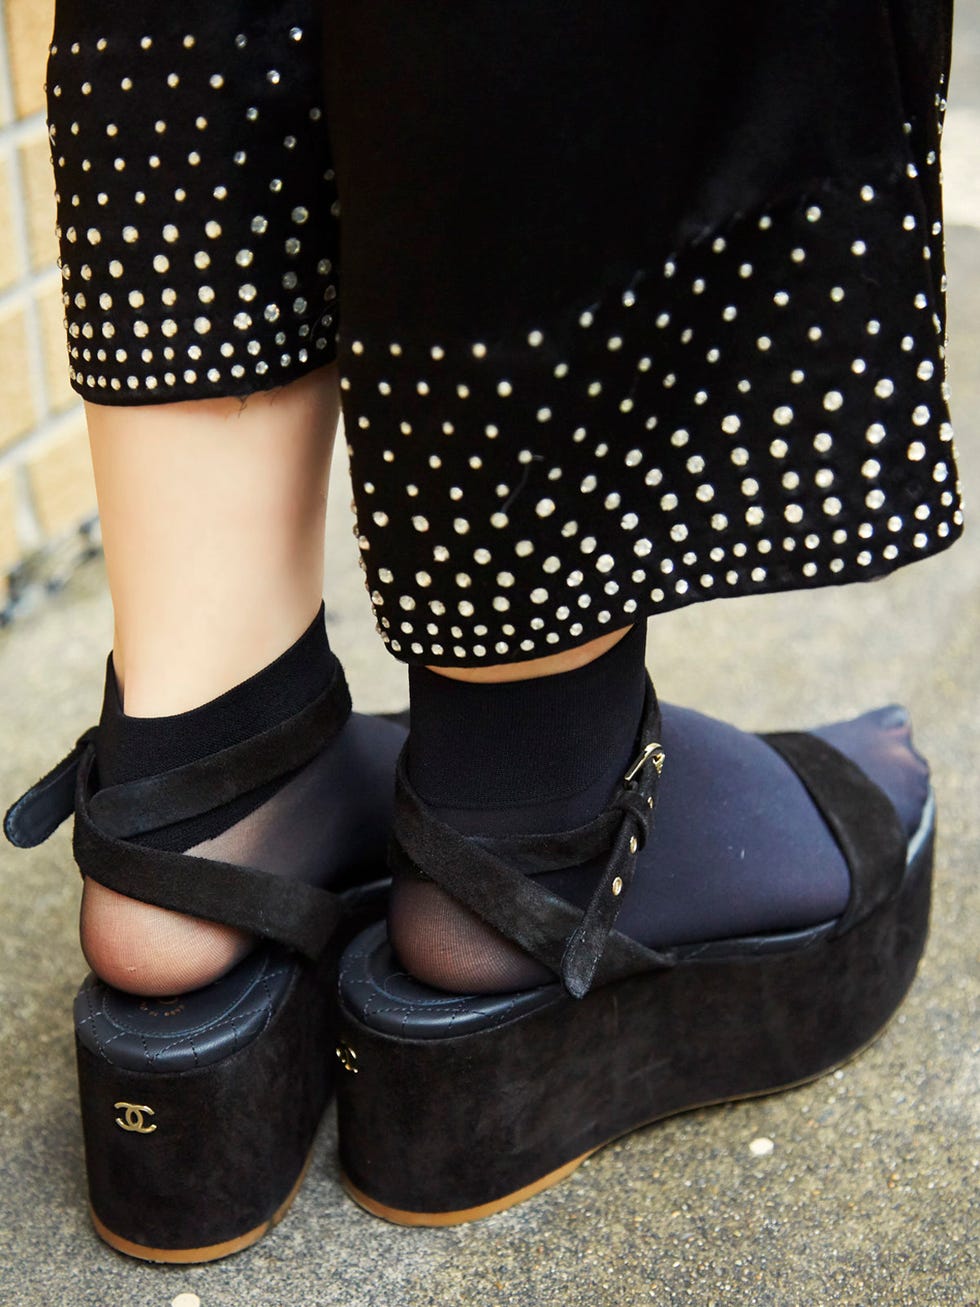 Pattern, Style, Polka dot, High heels, Fashion, Sandal, Black, Foot, Clog, Sock, 